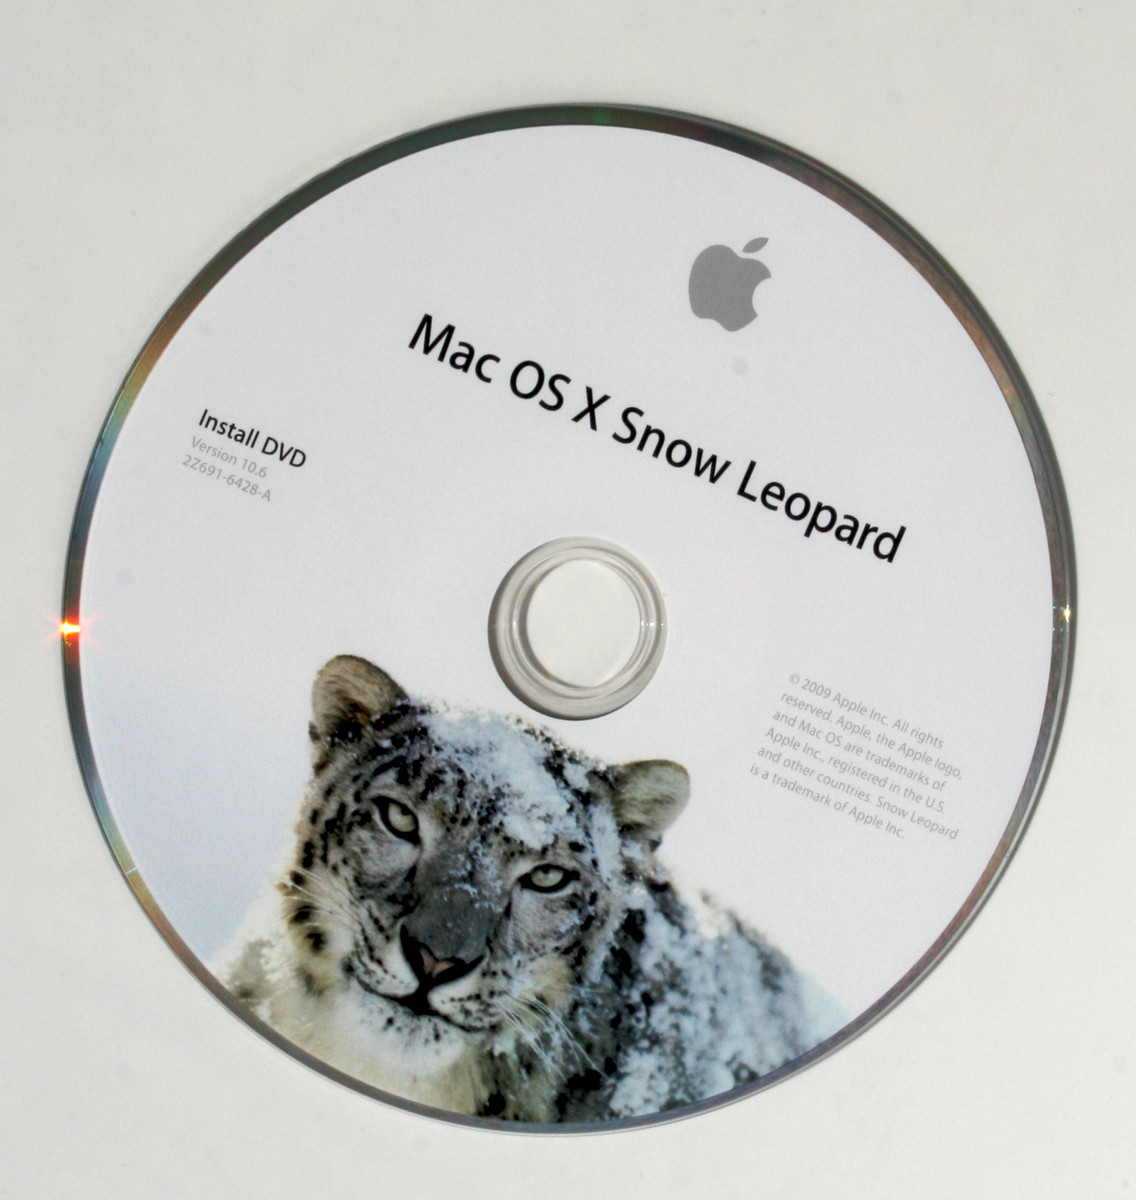 actualizacion mac os x 10.6 snow leopard